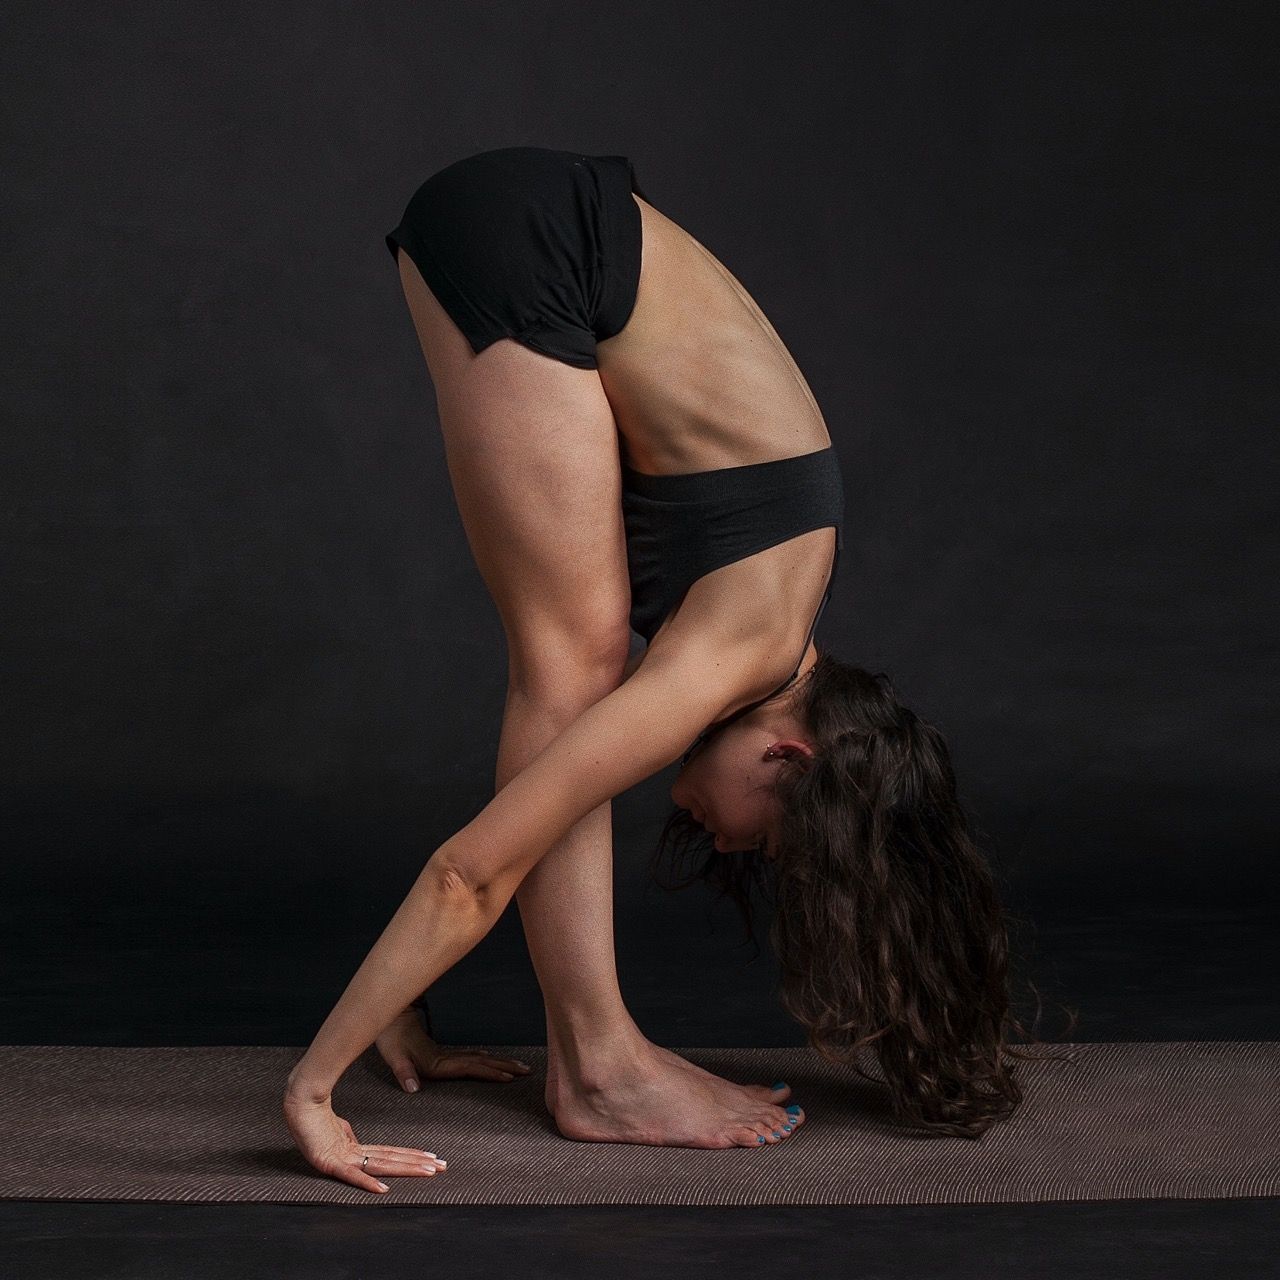 Photo by Roman Davayposmotrim: https://www.pexels.com/photo/woman-wearing-black-sports-bra-reaching-floor-while-standing-35987/